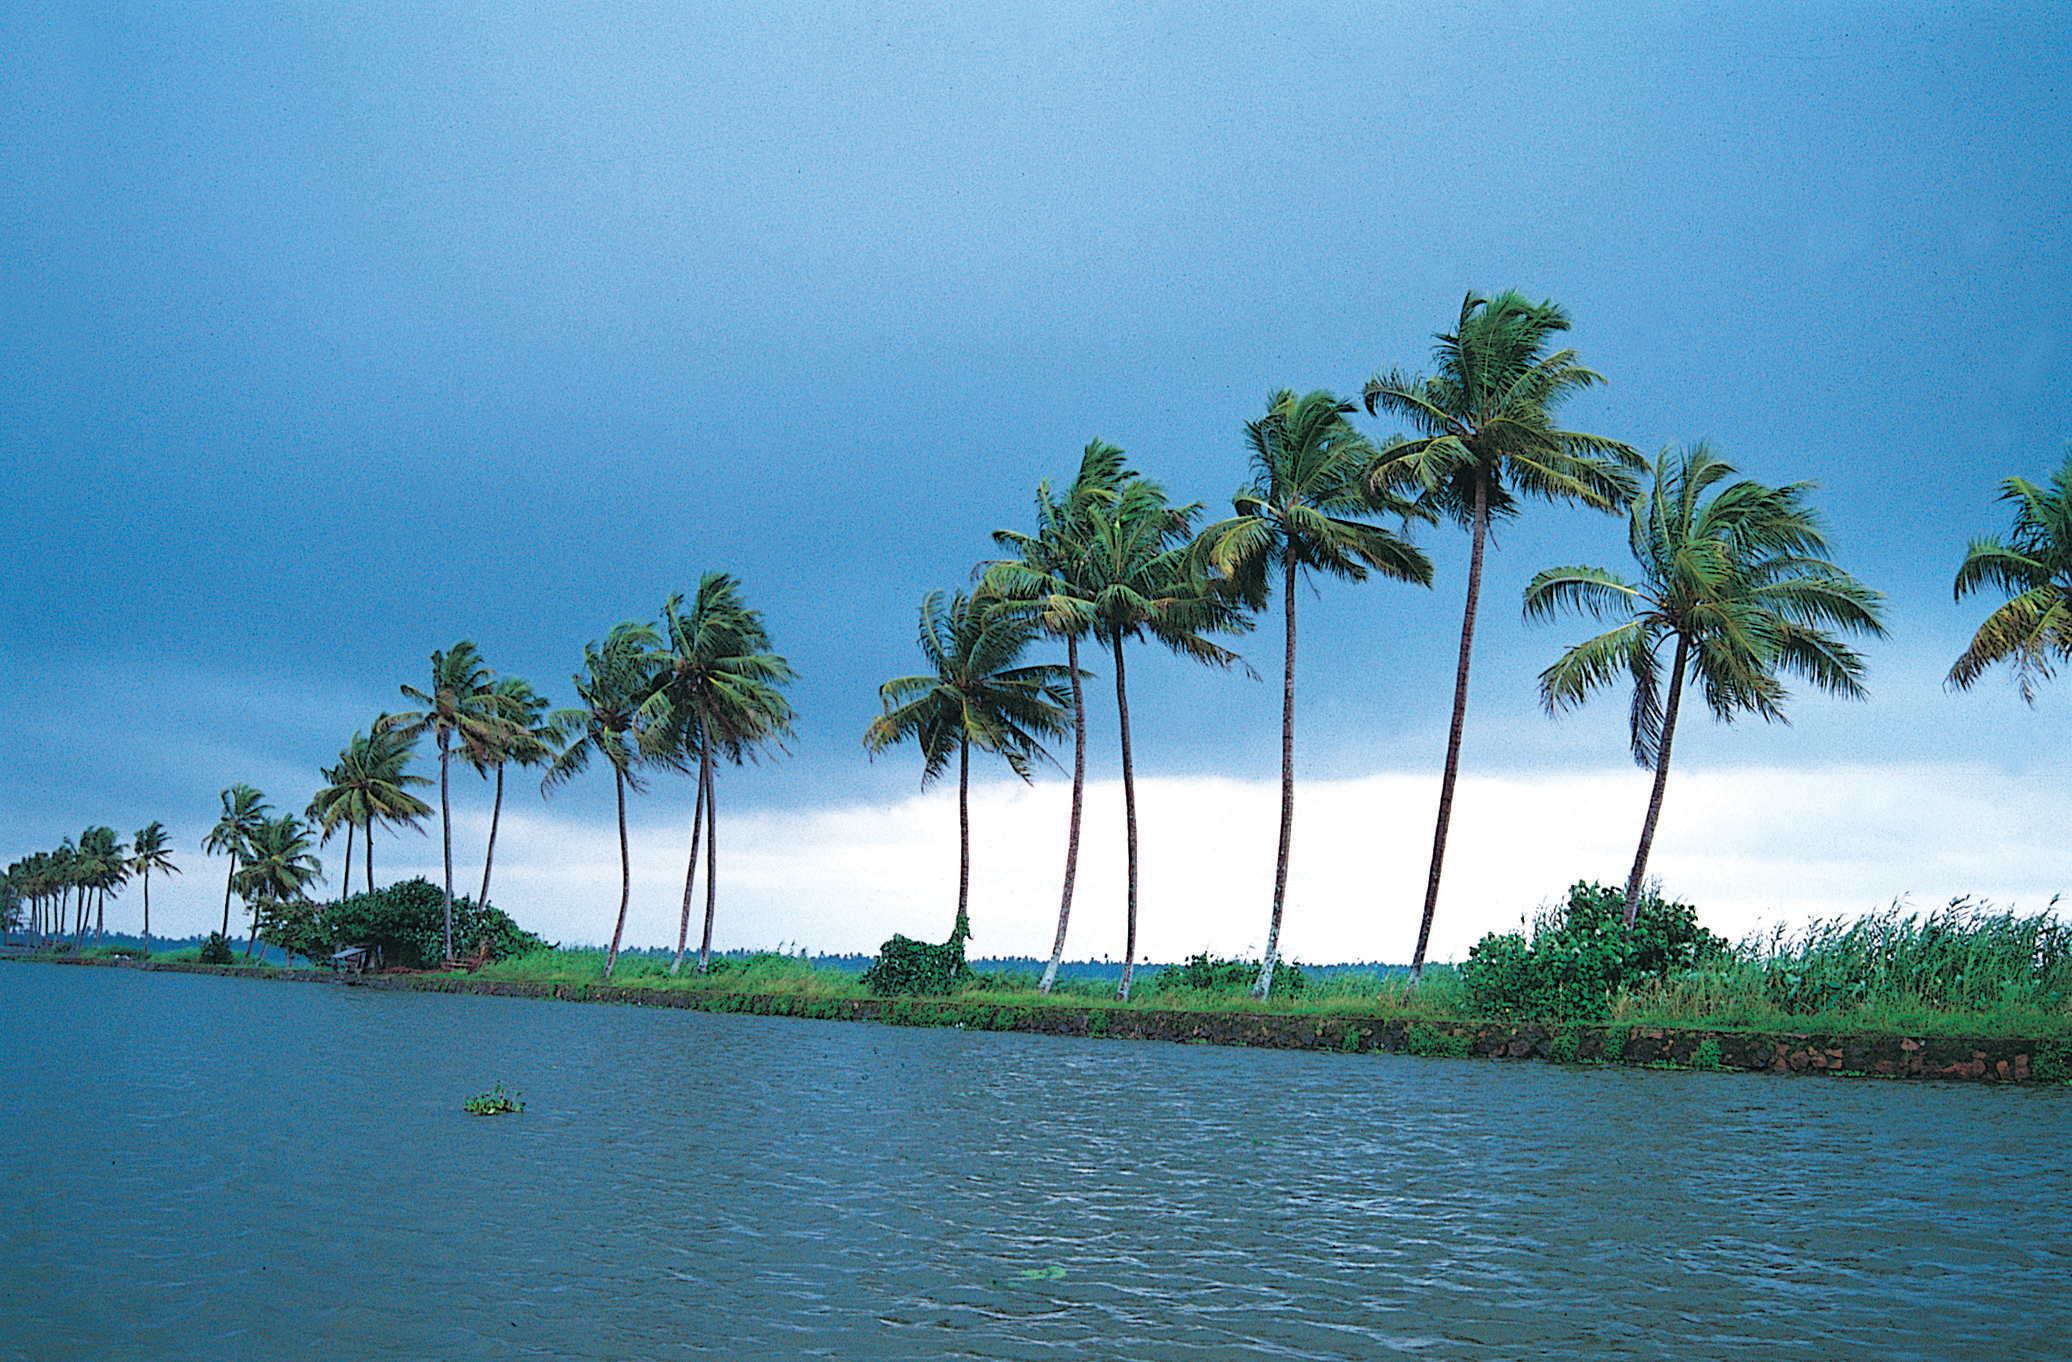 Download High Resolution Pictures Kerala Tourism Kerala Tourism